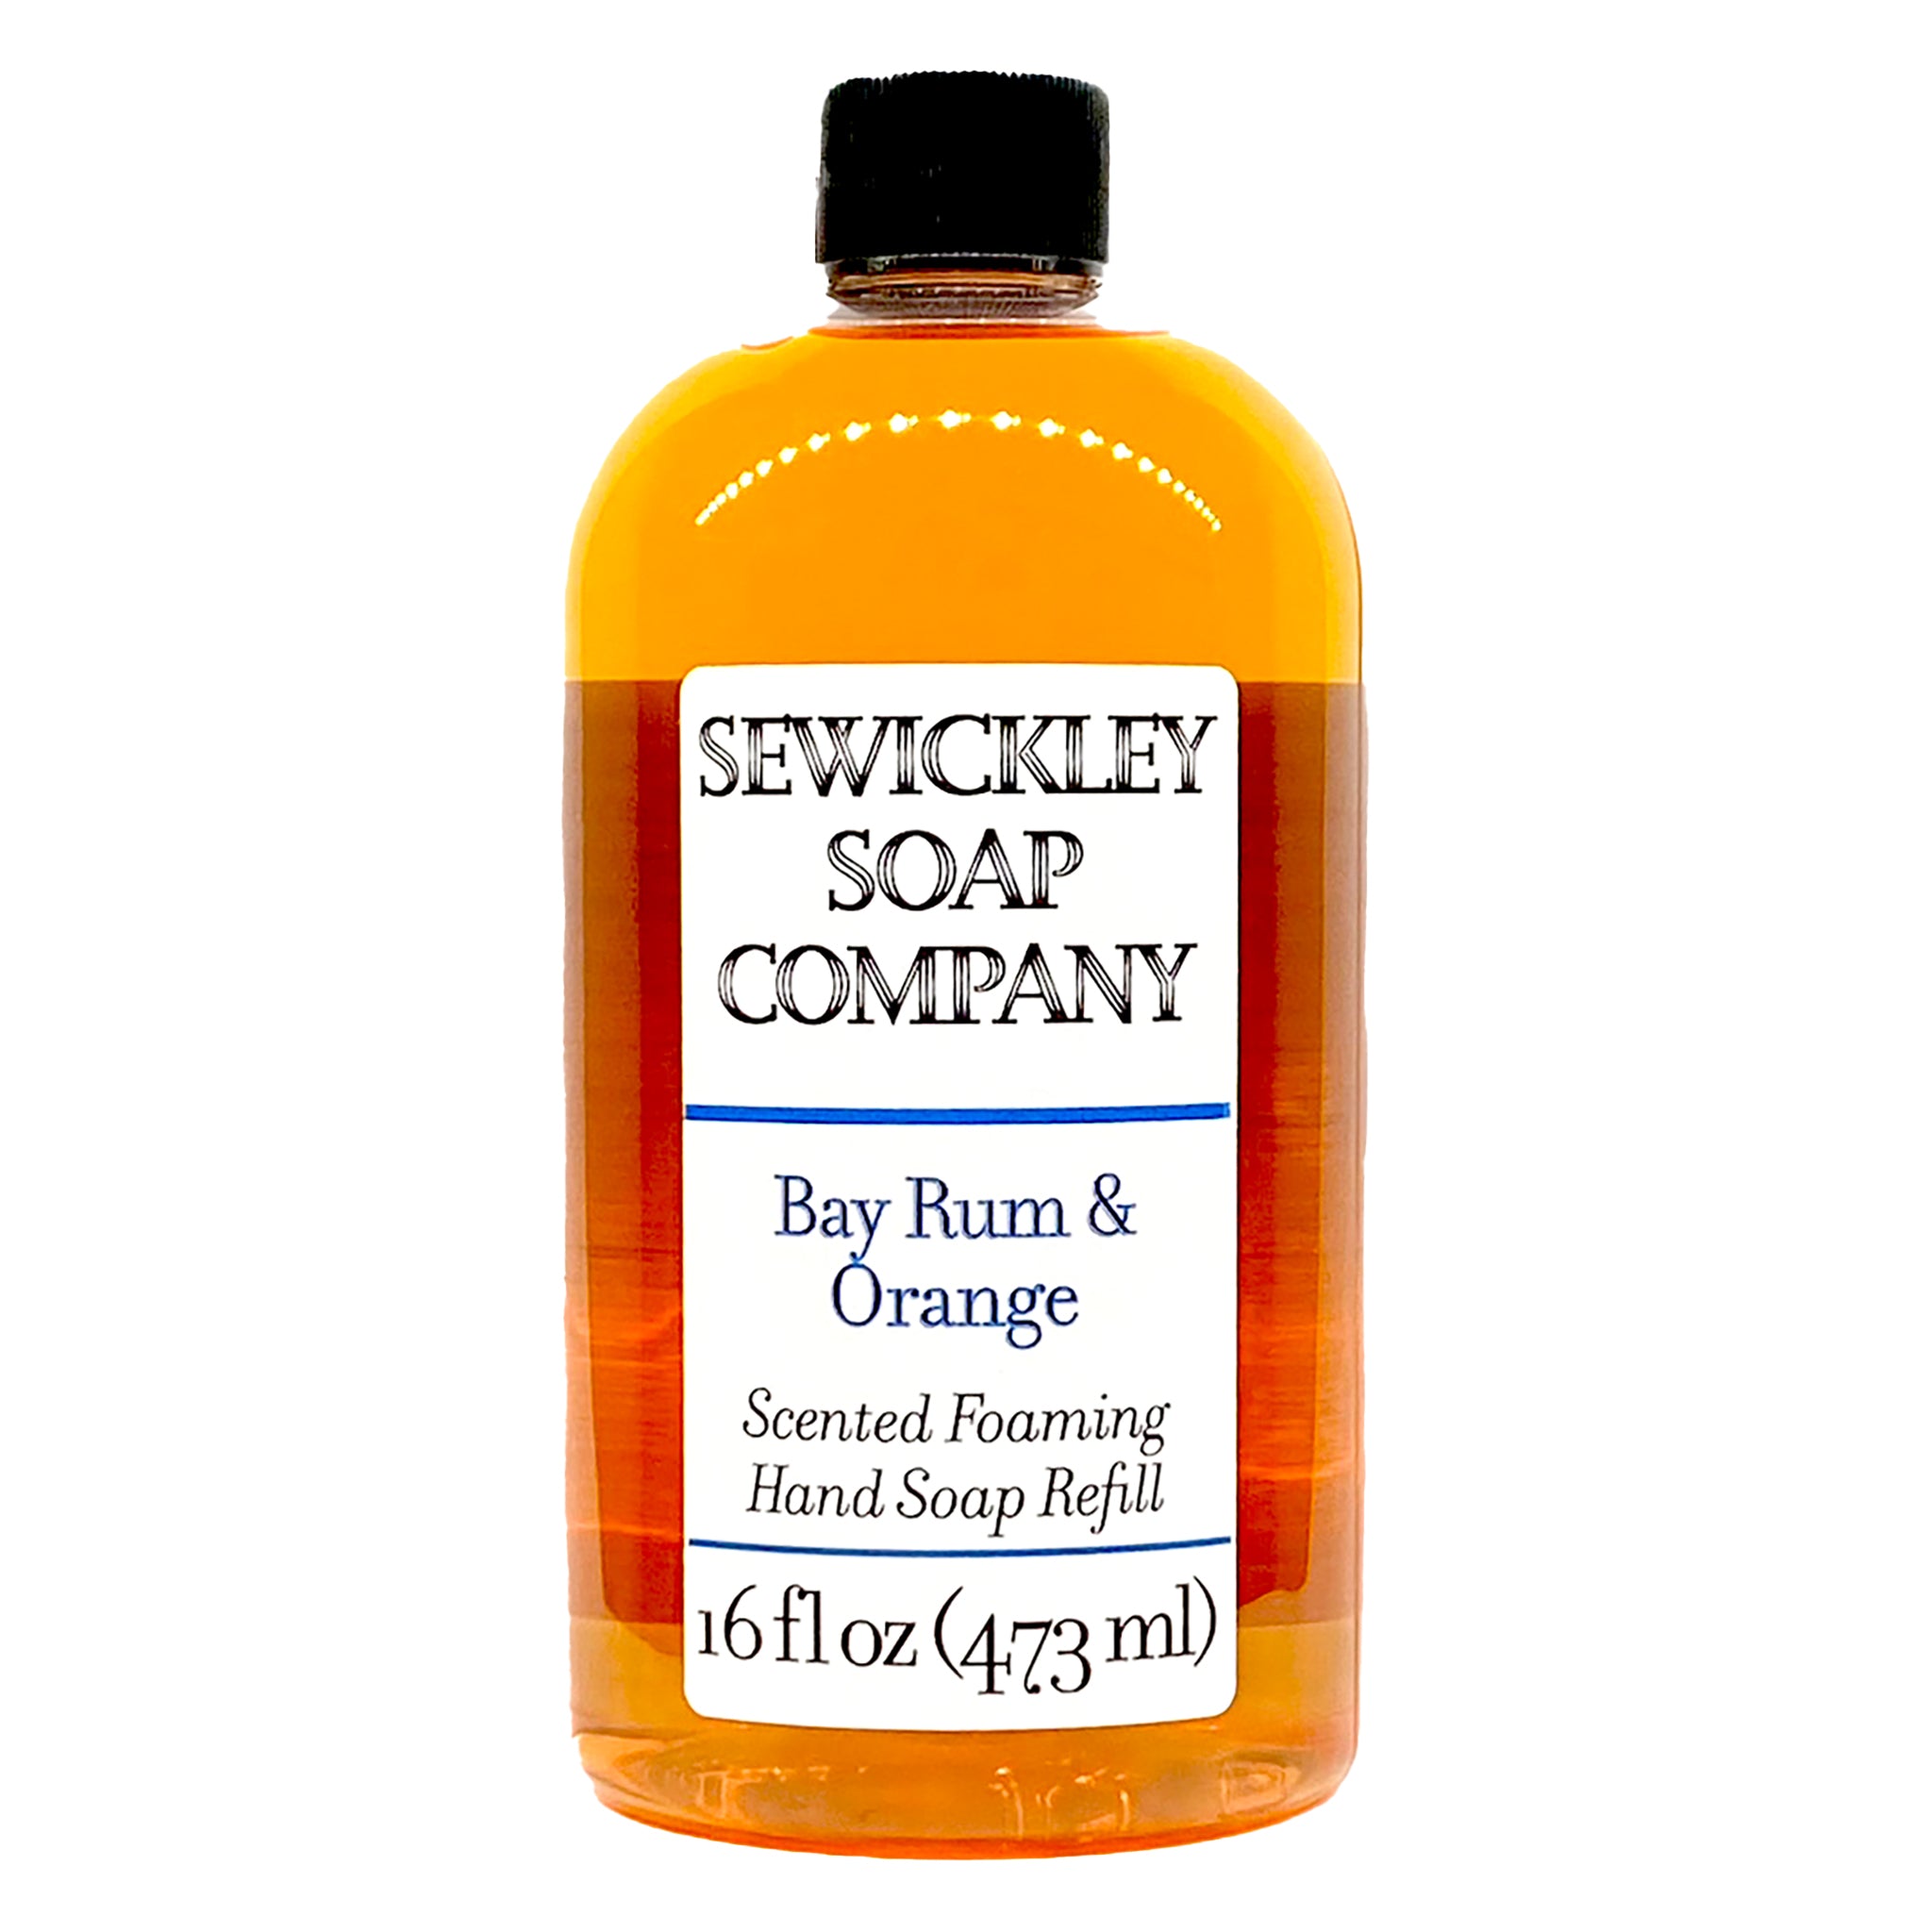 Bay Rum & Orange Scented Foaming Hand Soap Refills